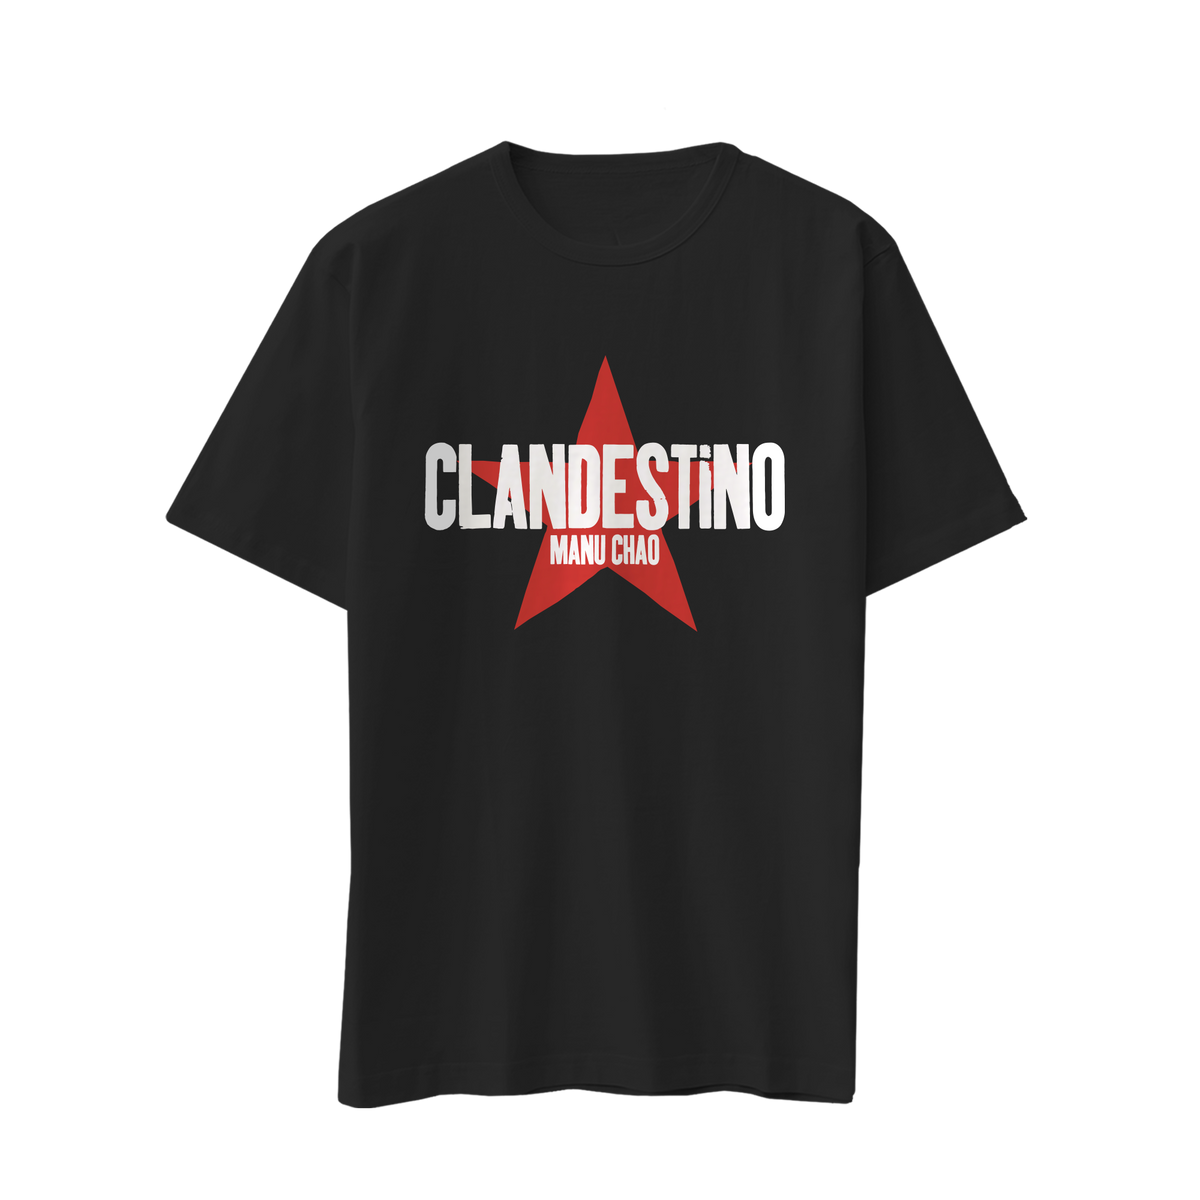 "Clandestino" T-shirt